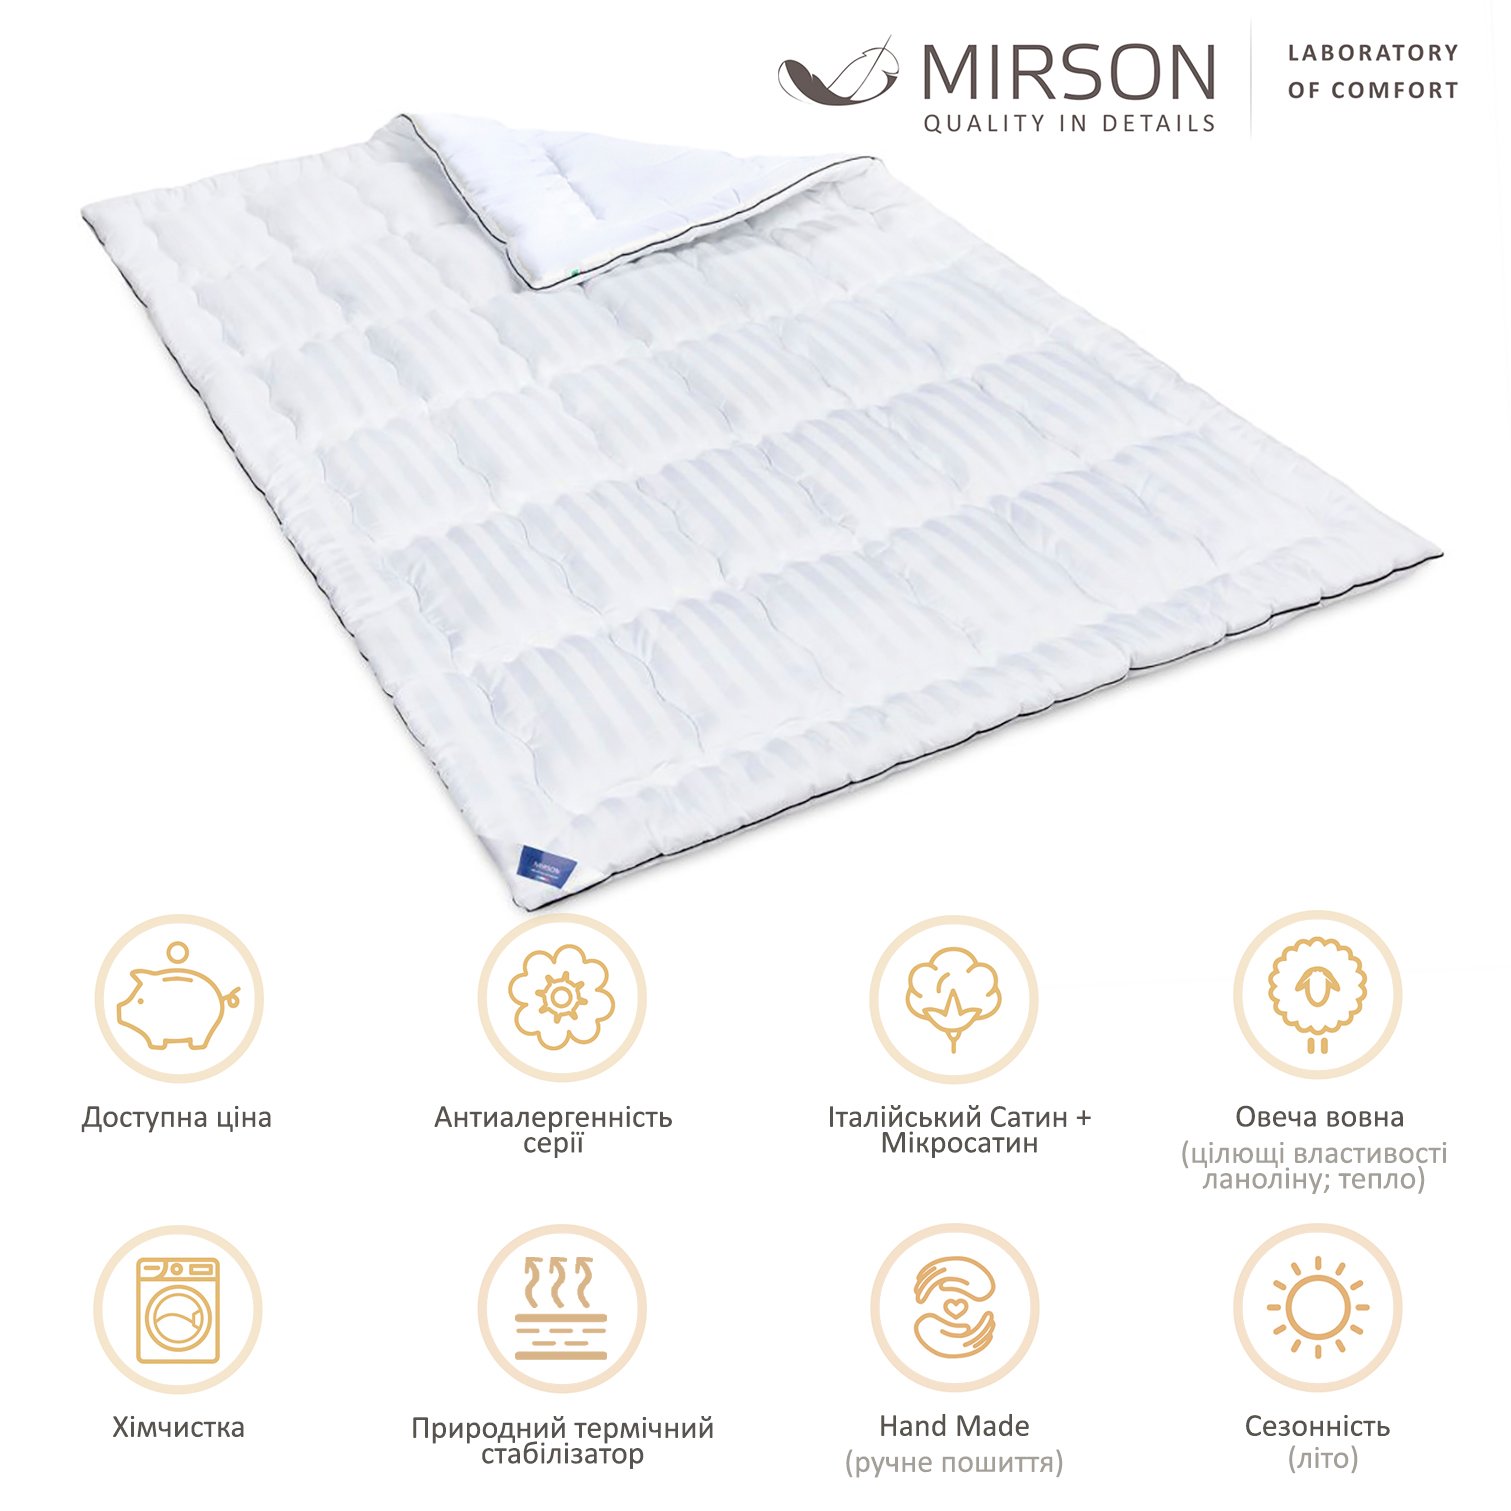 Одеяло шерстяное MirSon Royal Pearl Hand Made №1360, летнее, 200x220 см, белое - фото 5